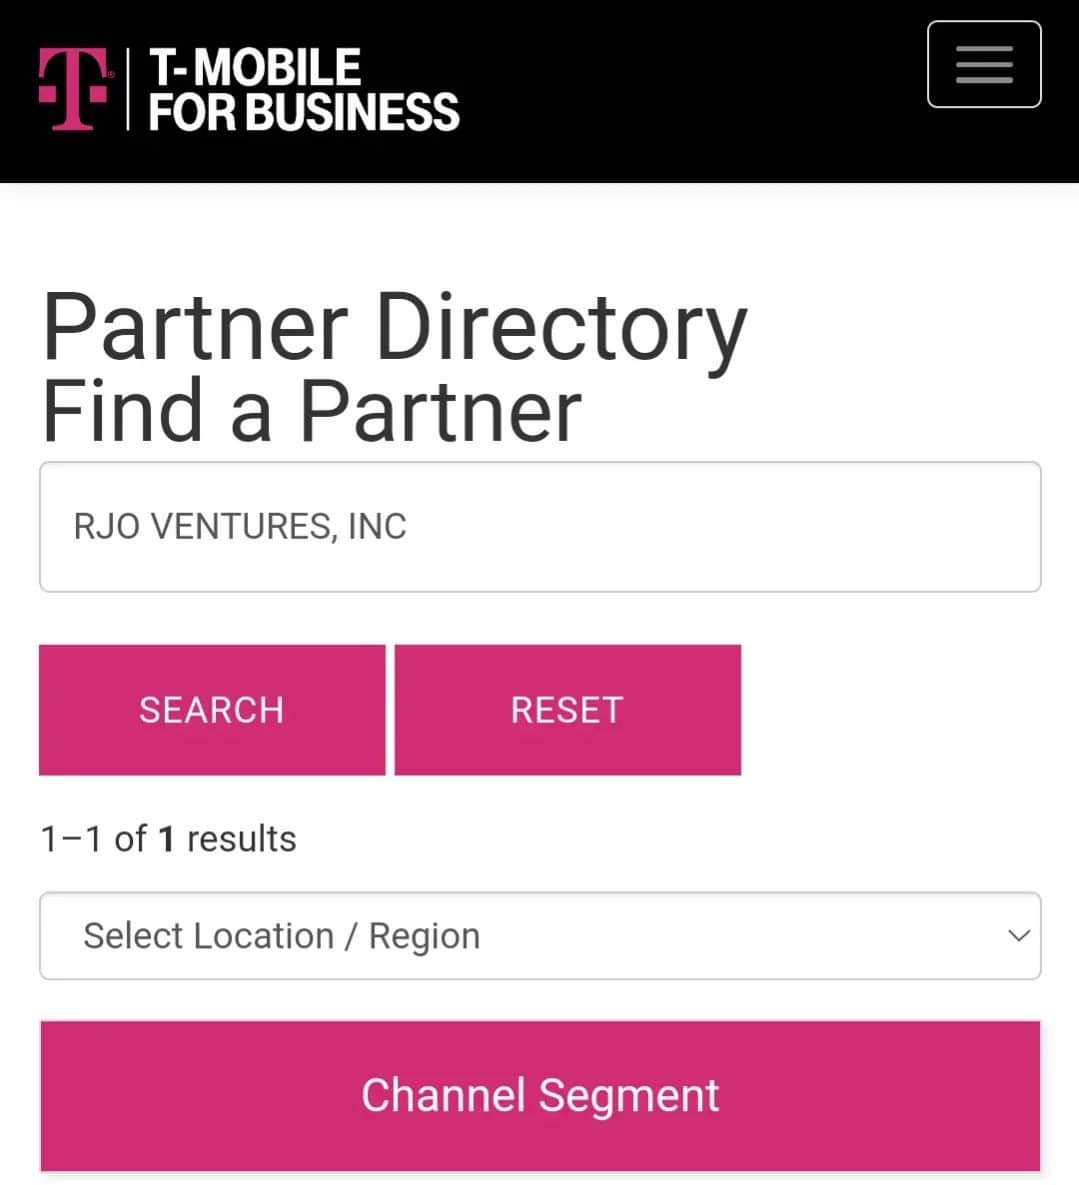 T-Mobile for Business Partner Program Directory - RJO Ventures Inc